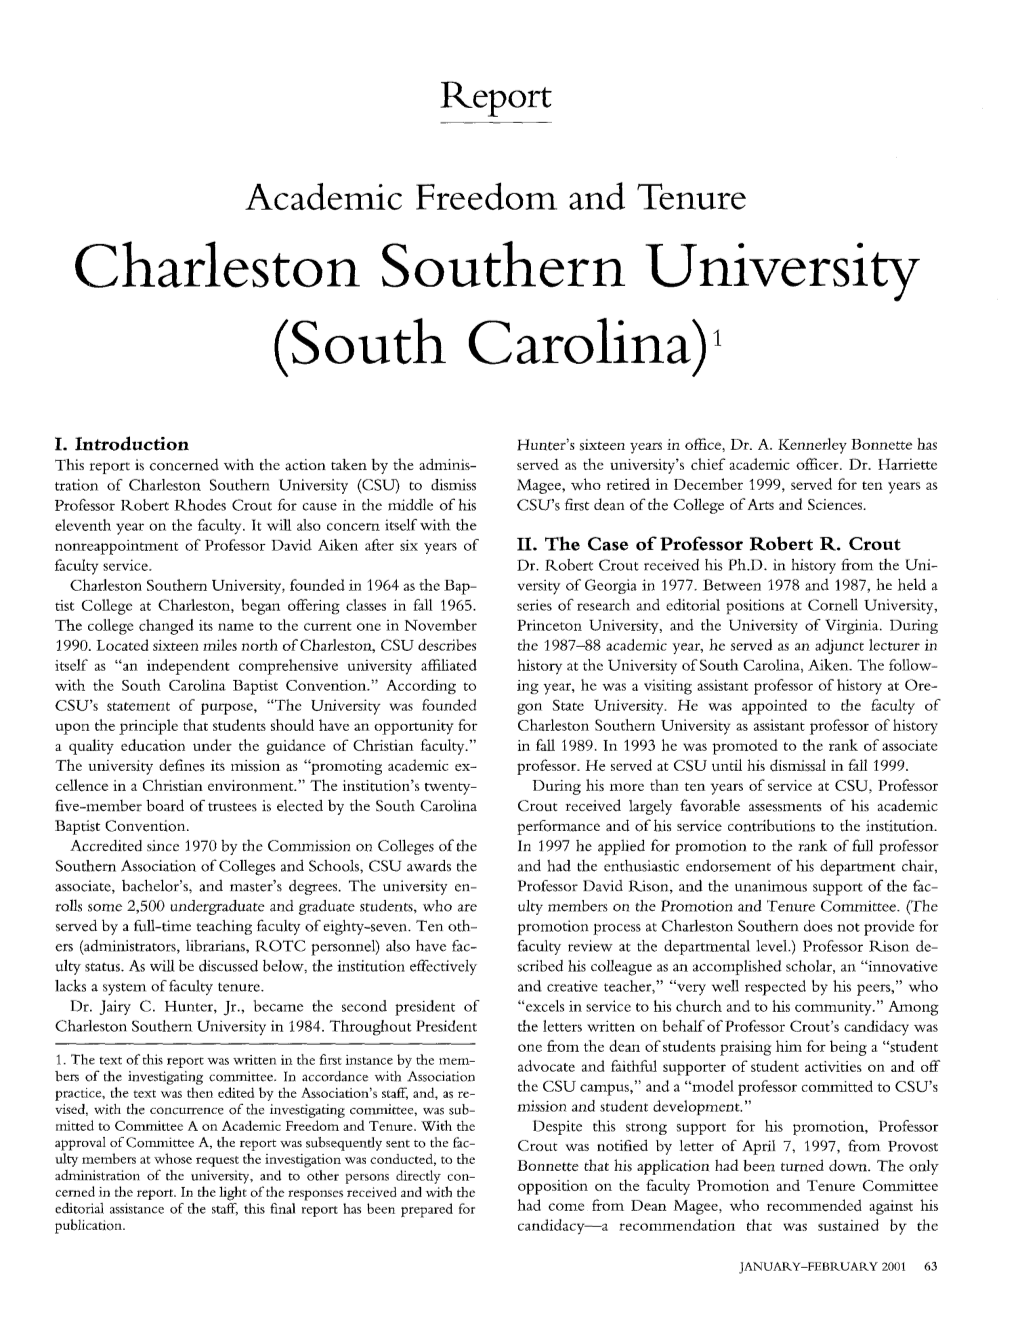 Charleston Southern University (South Carolina)1